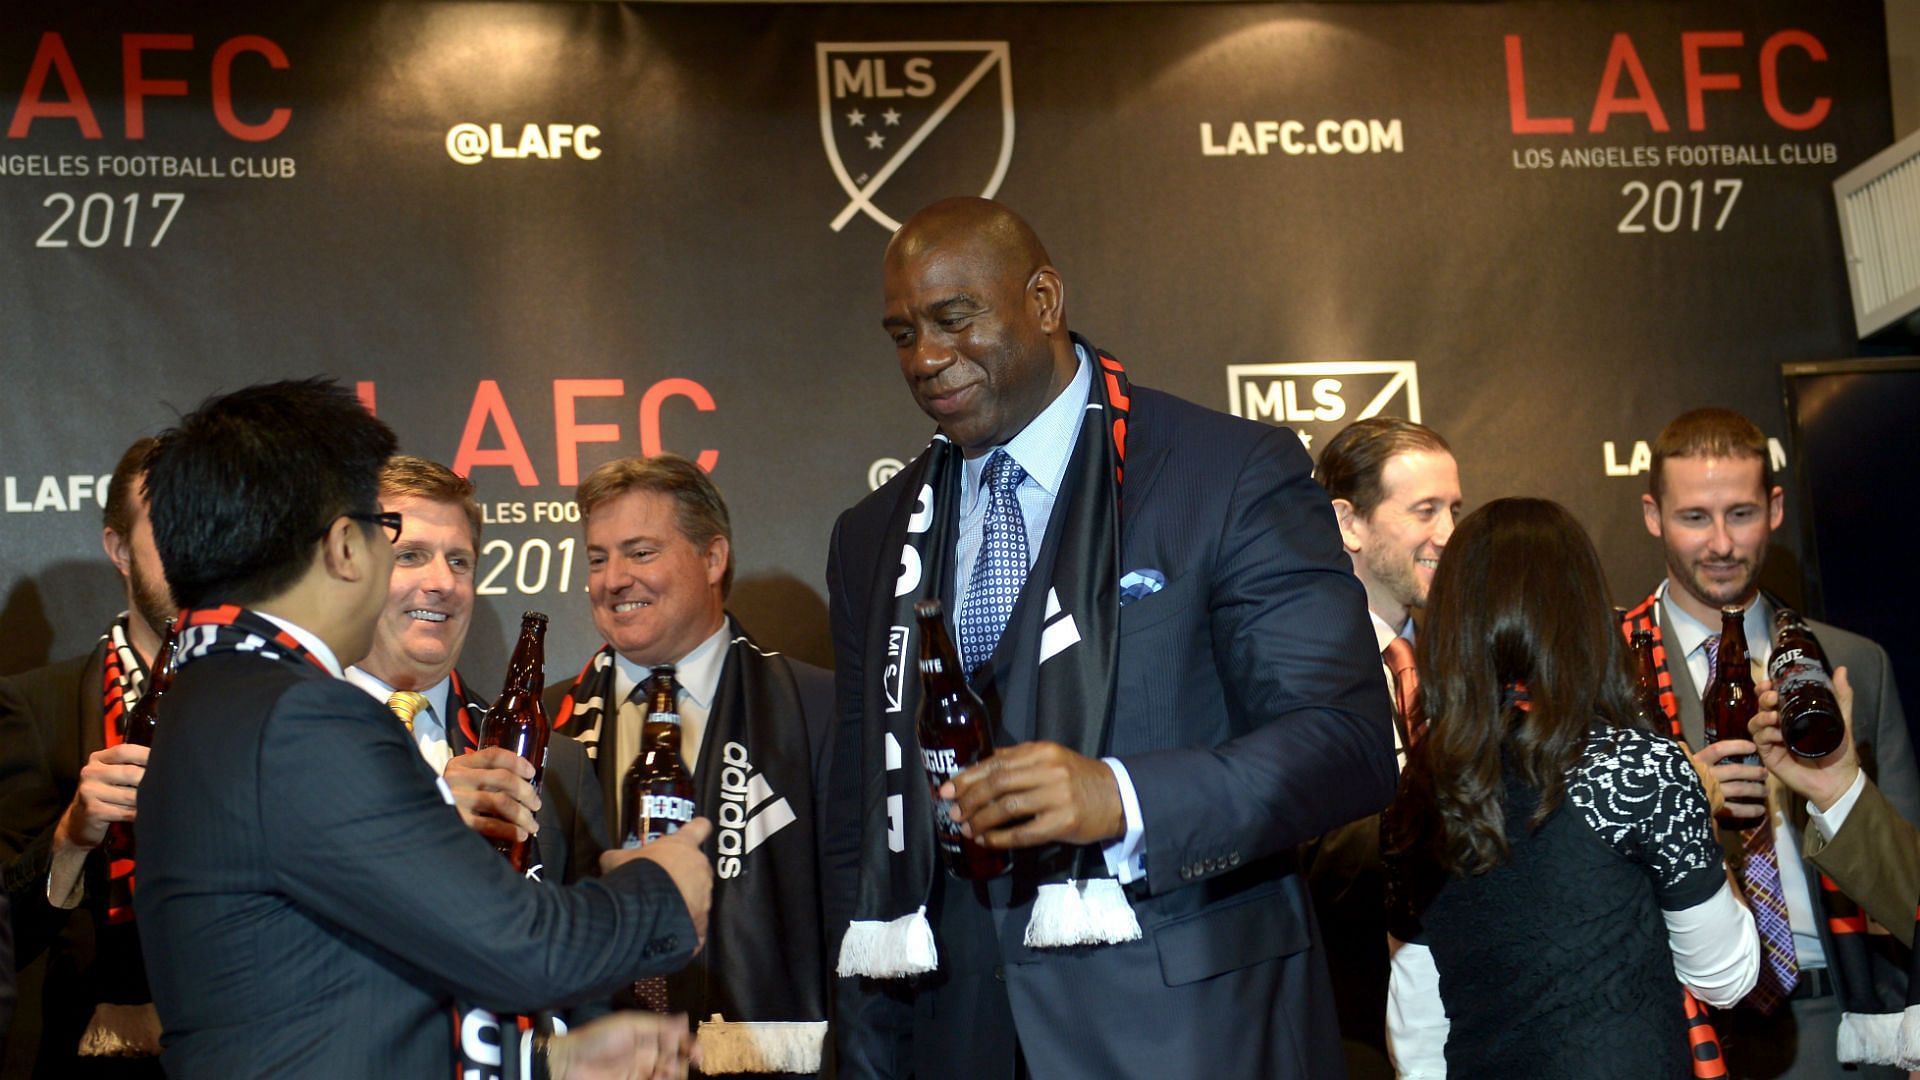 Magic Johnson of LAFC. (Photo: Sporting News)